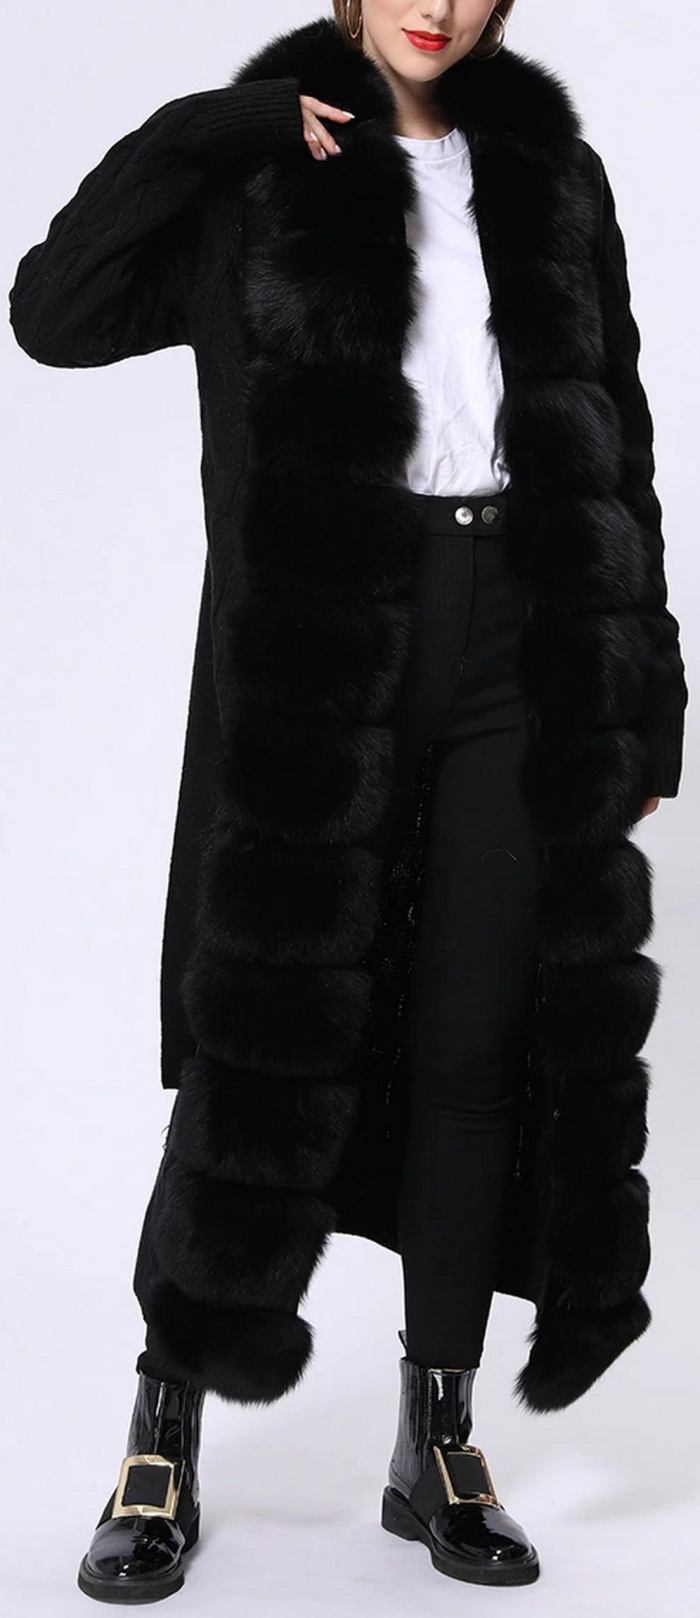 Fur-Trim Long Knit Cardigan Sweater-Coat, Black Inspired Fashions Boutique